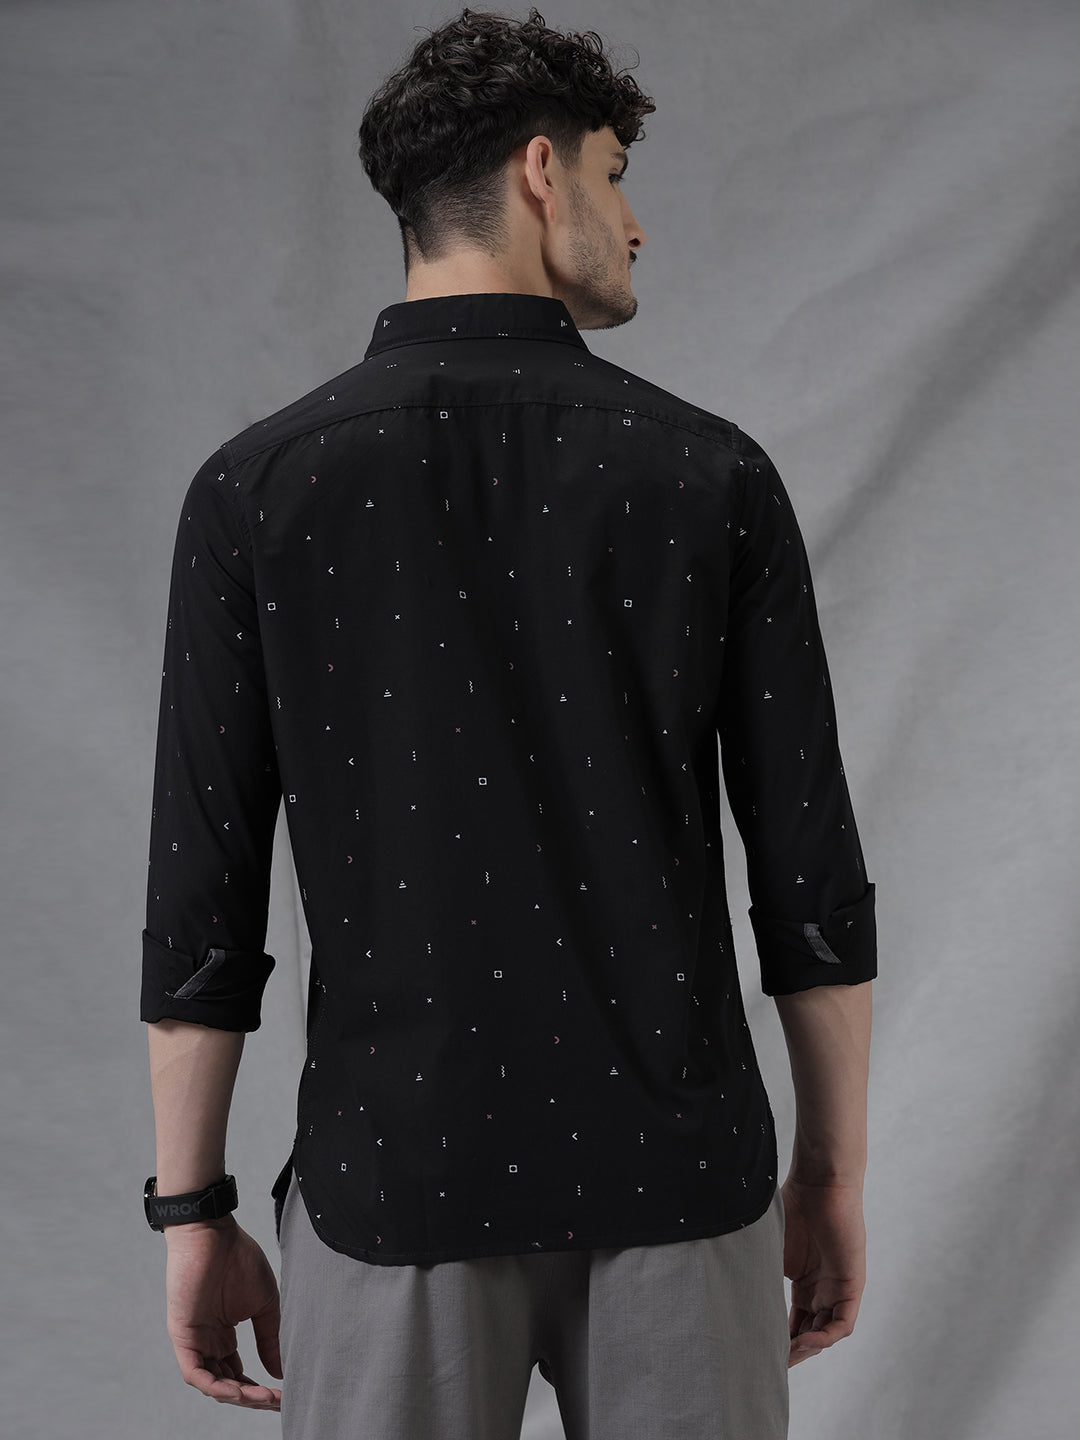 Dots & Dashes Black AOP Shirt